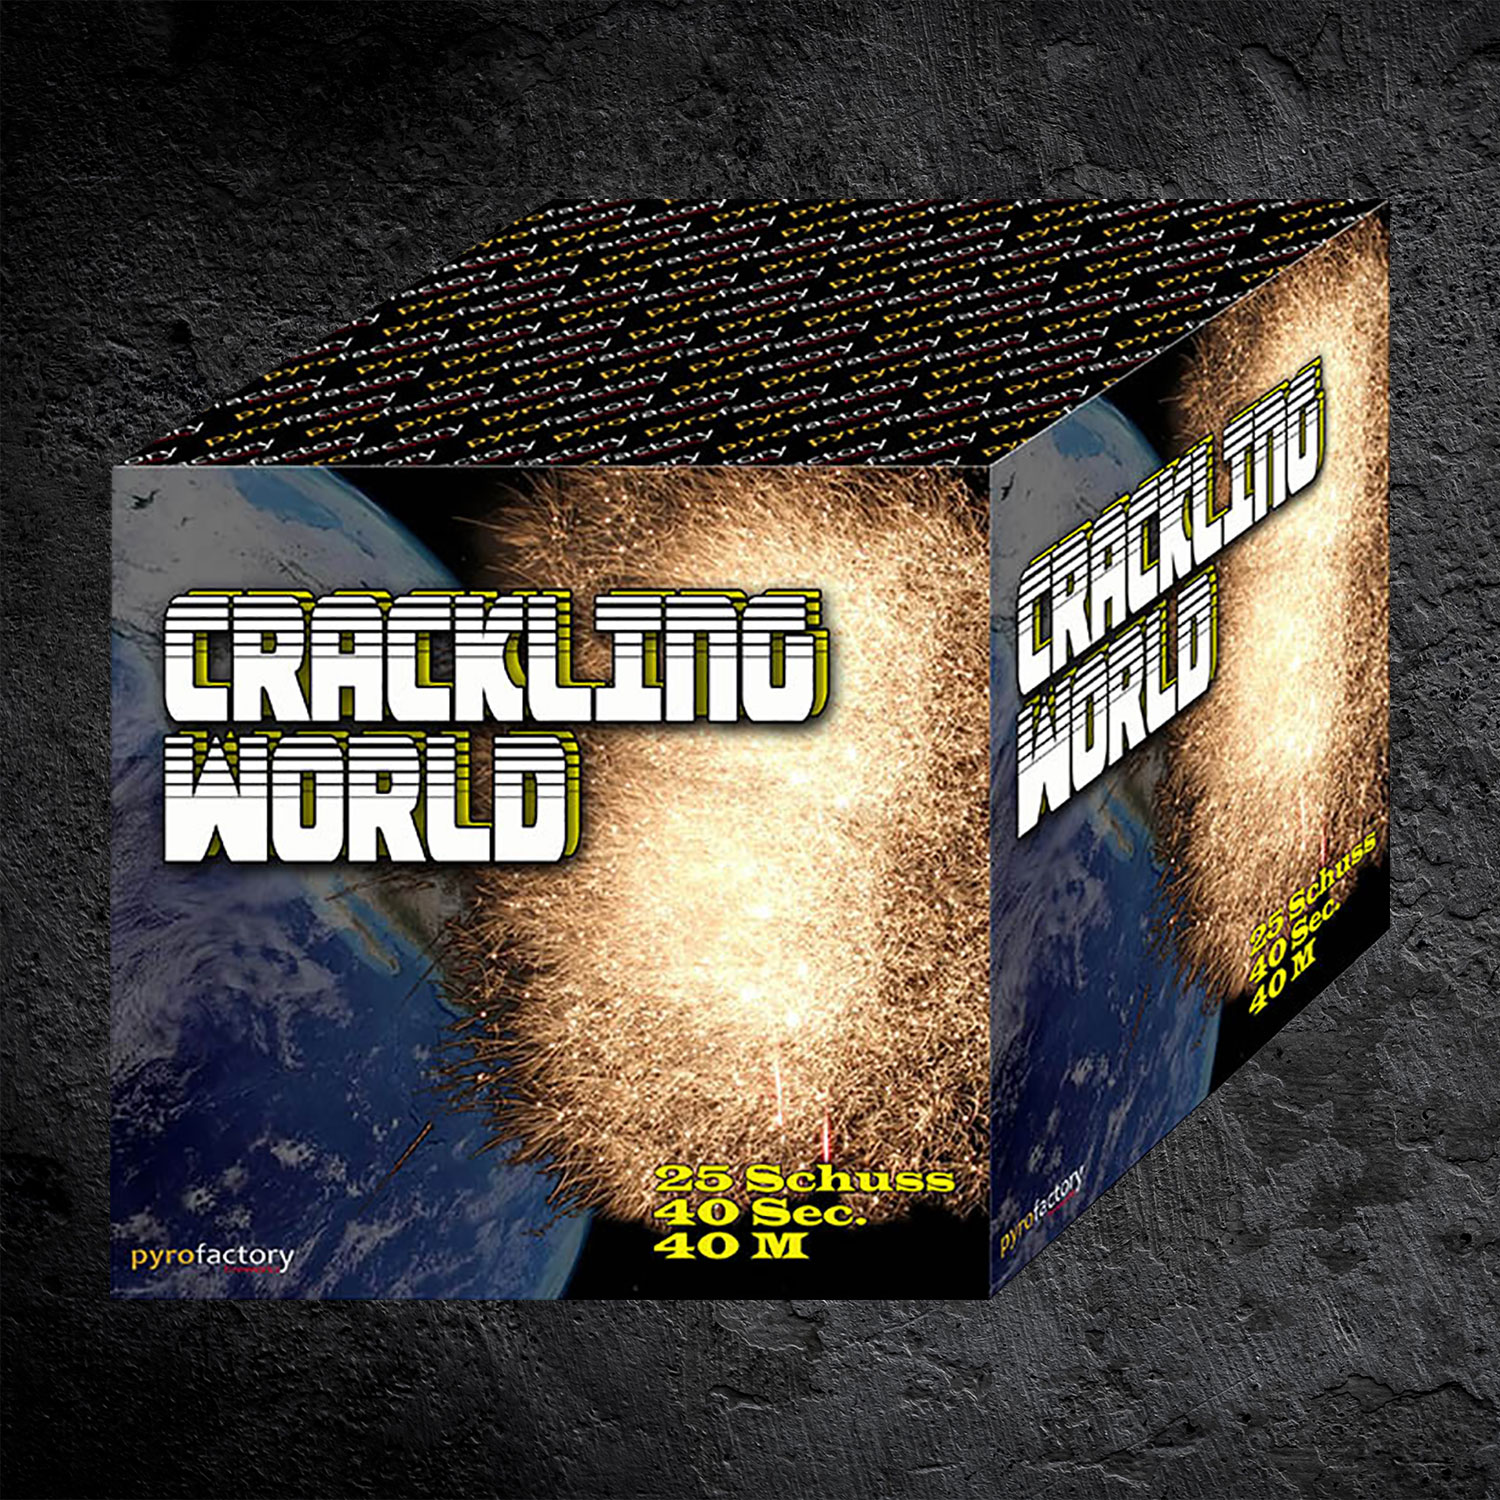 Crackling World